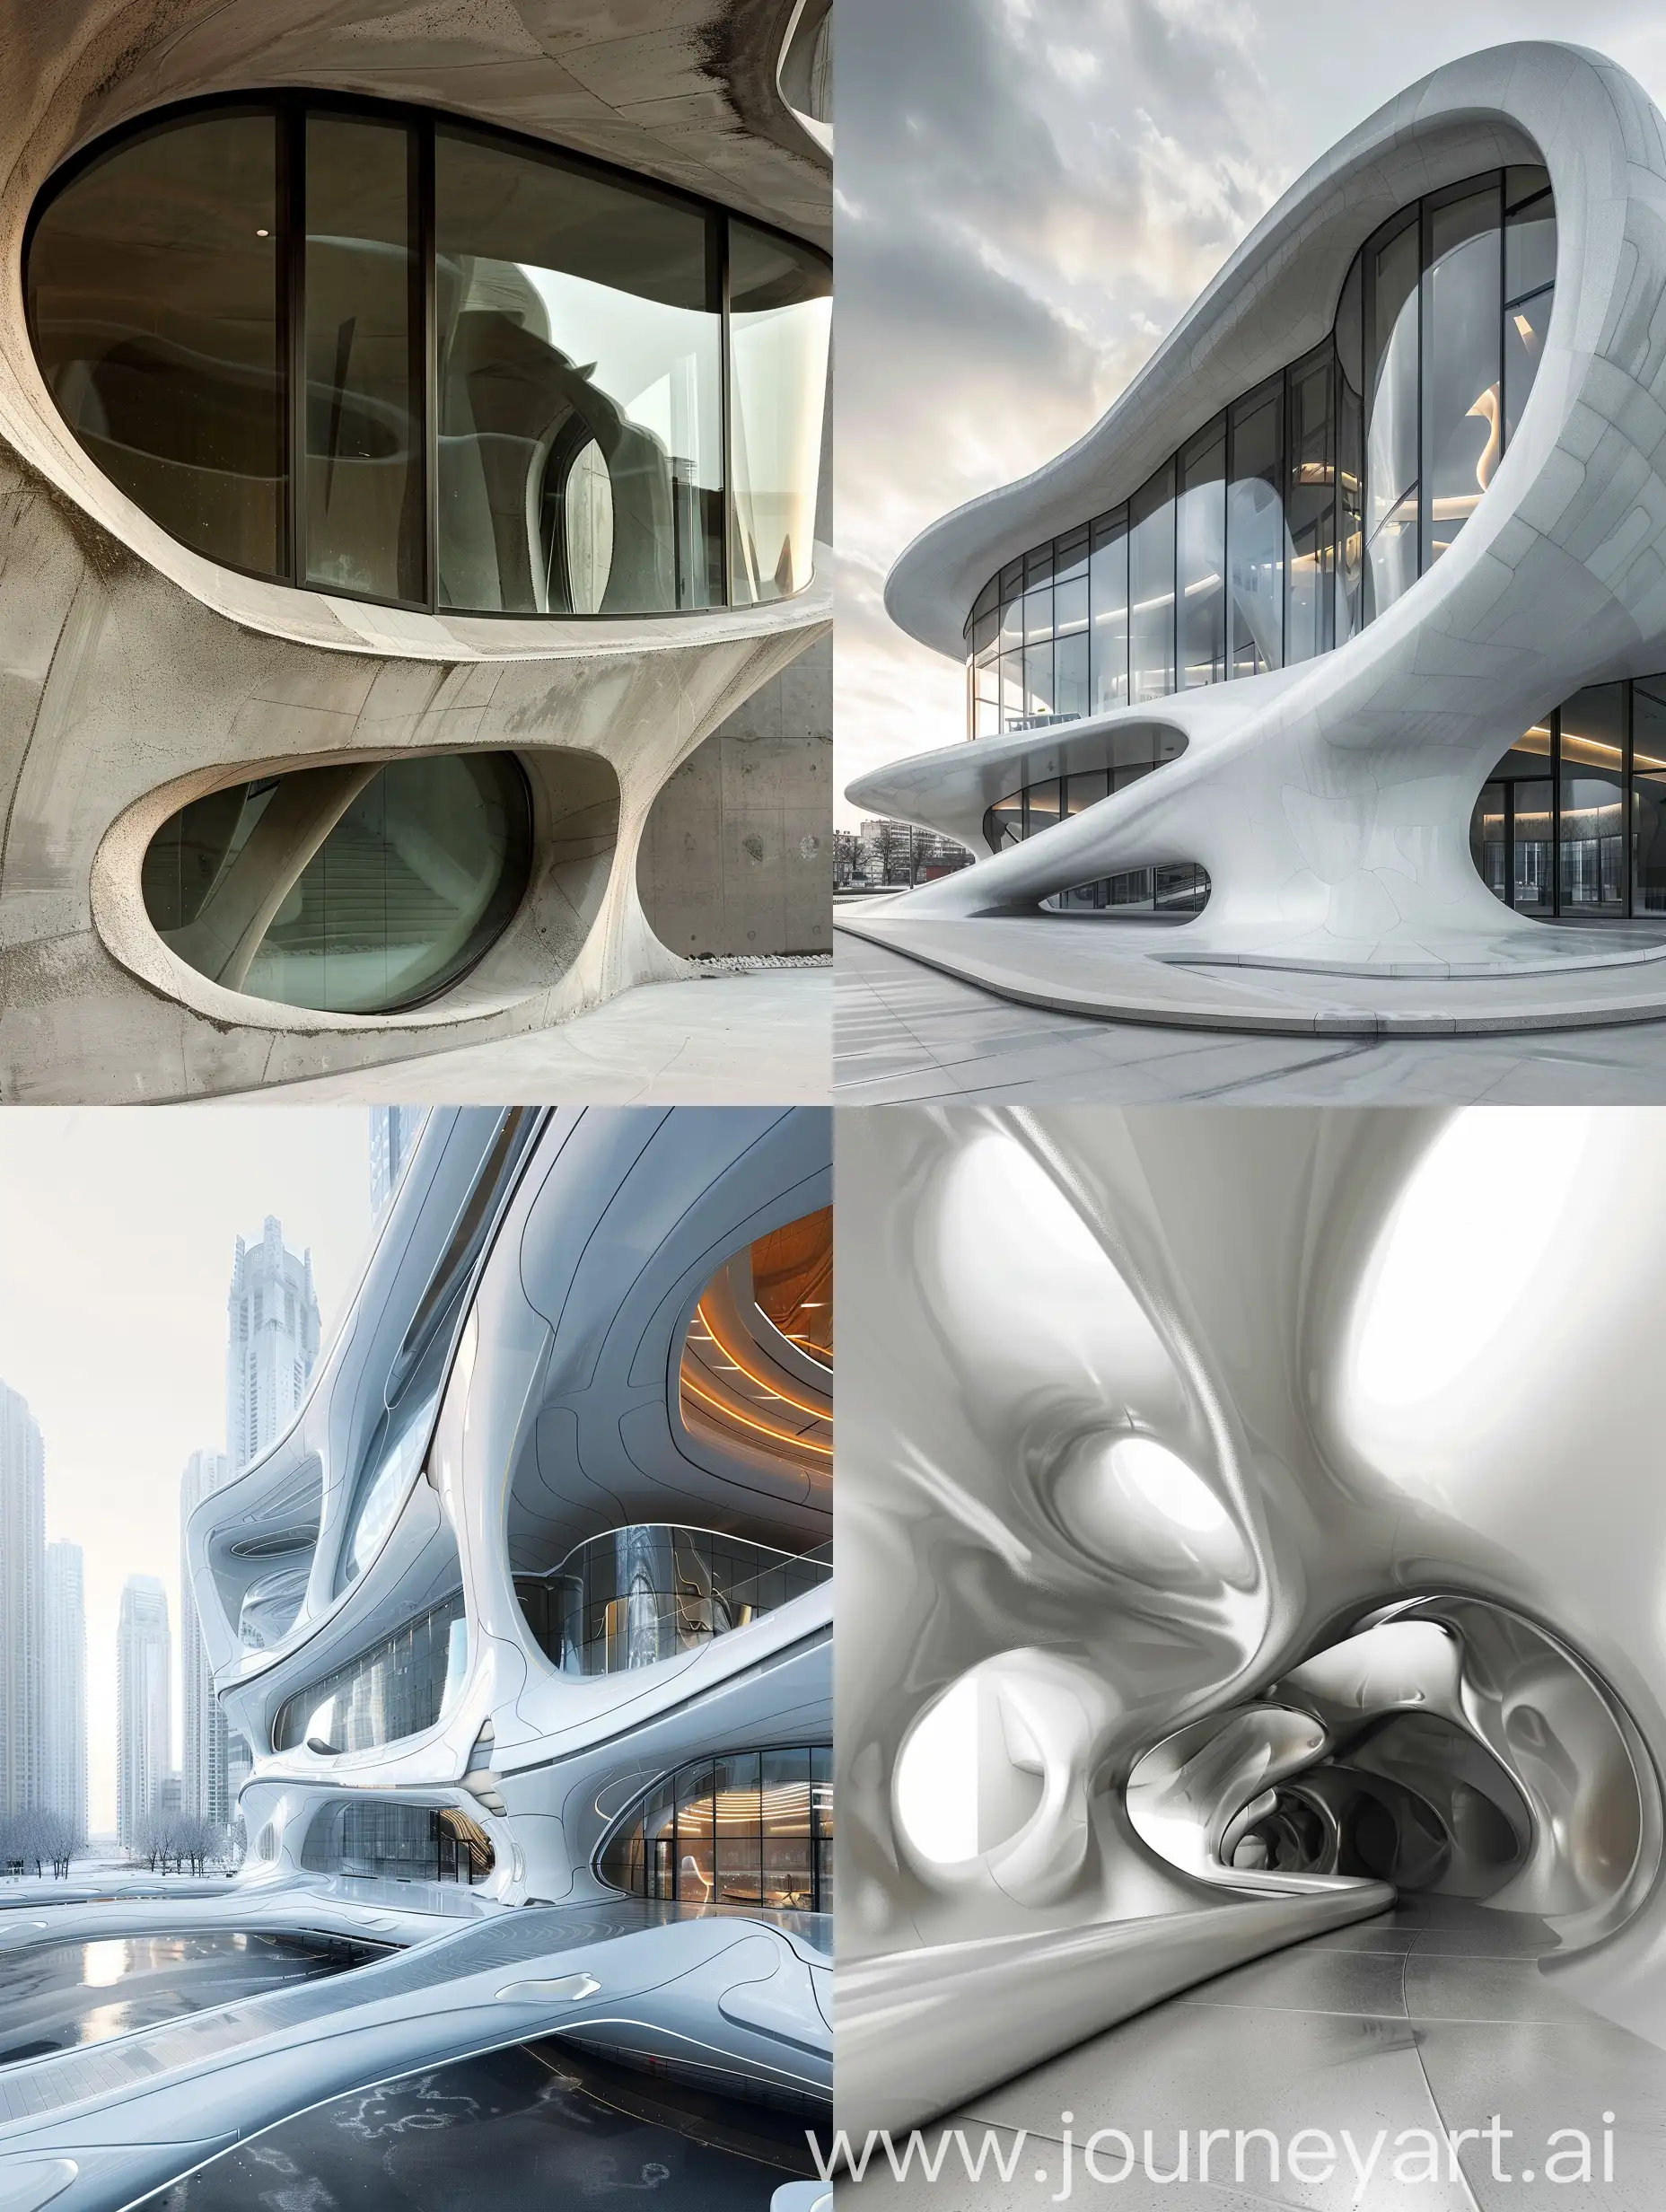 Futuristic-Architectural-Design-by-Zaha-Hadid-Abstract-Form-in-Monochrome